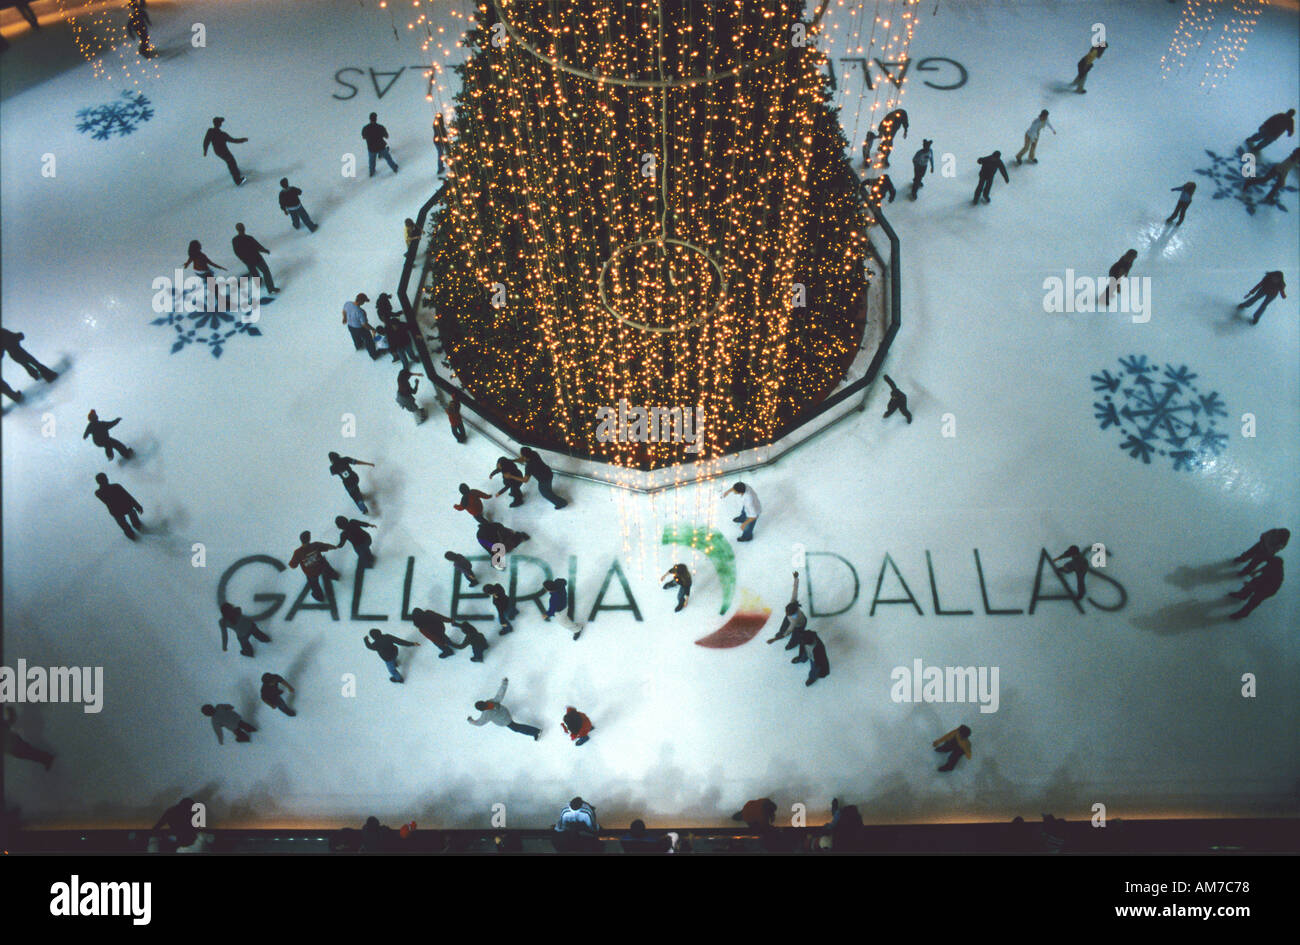 Galleria shopping mall, Dallas, Texas, USA Stock Photo - Alamy